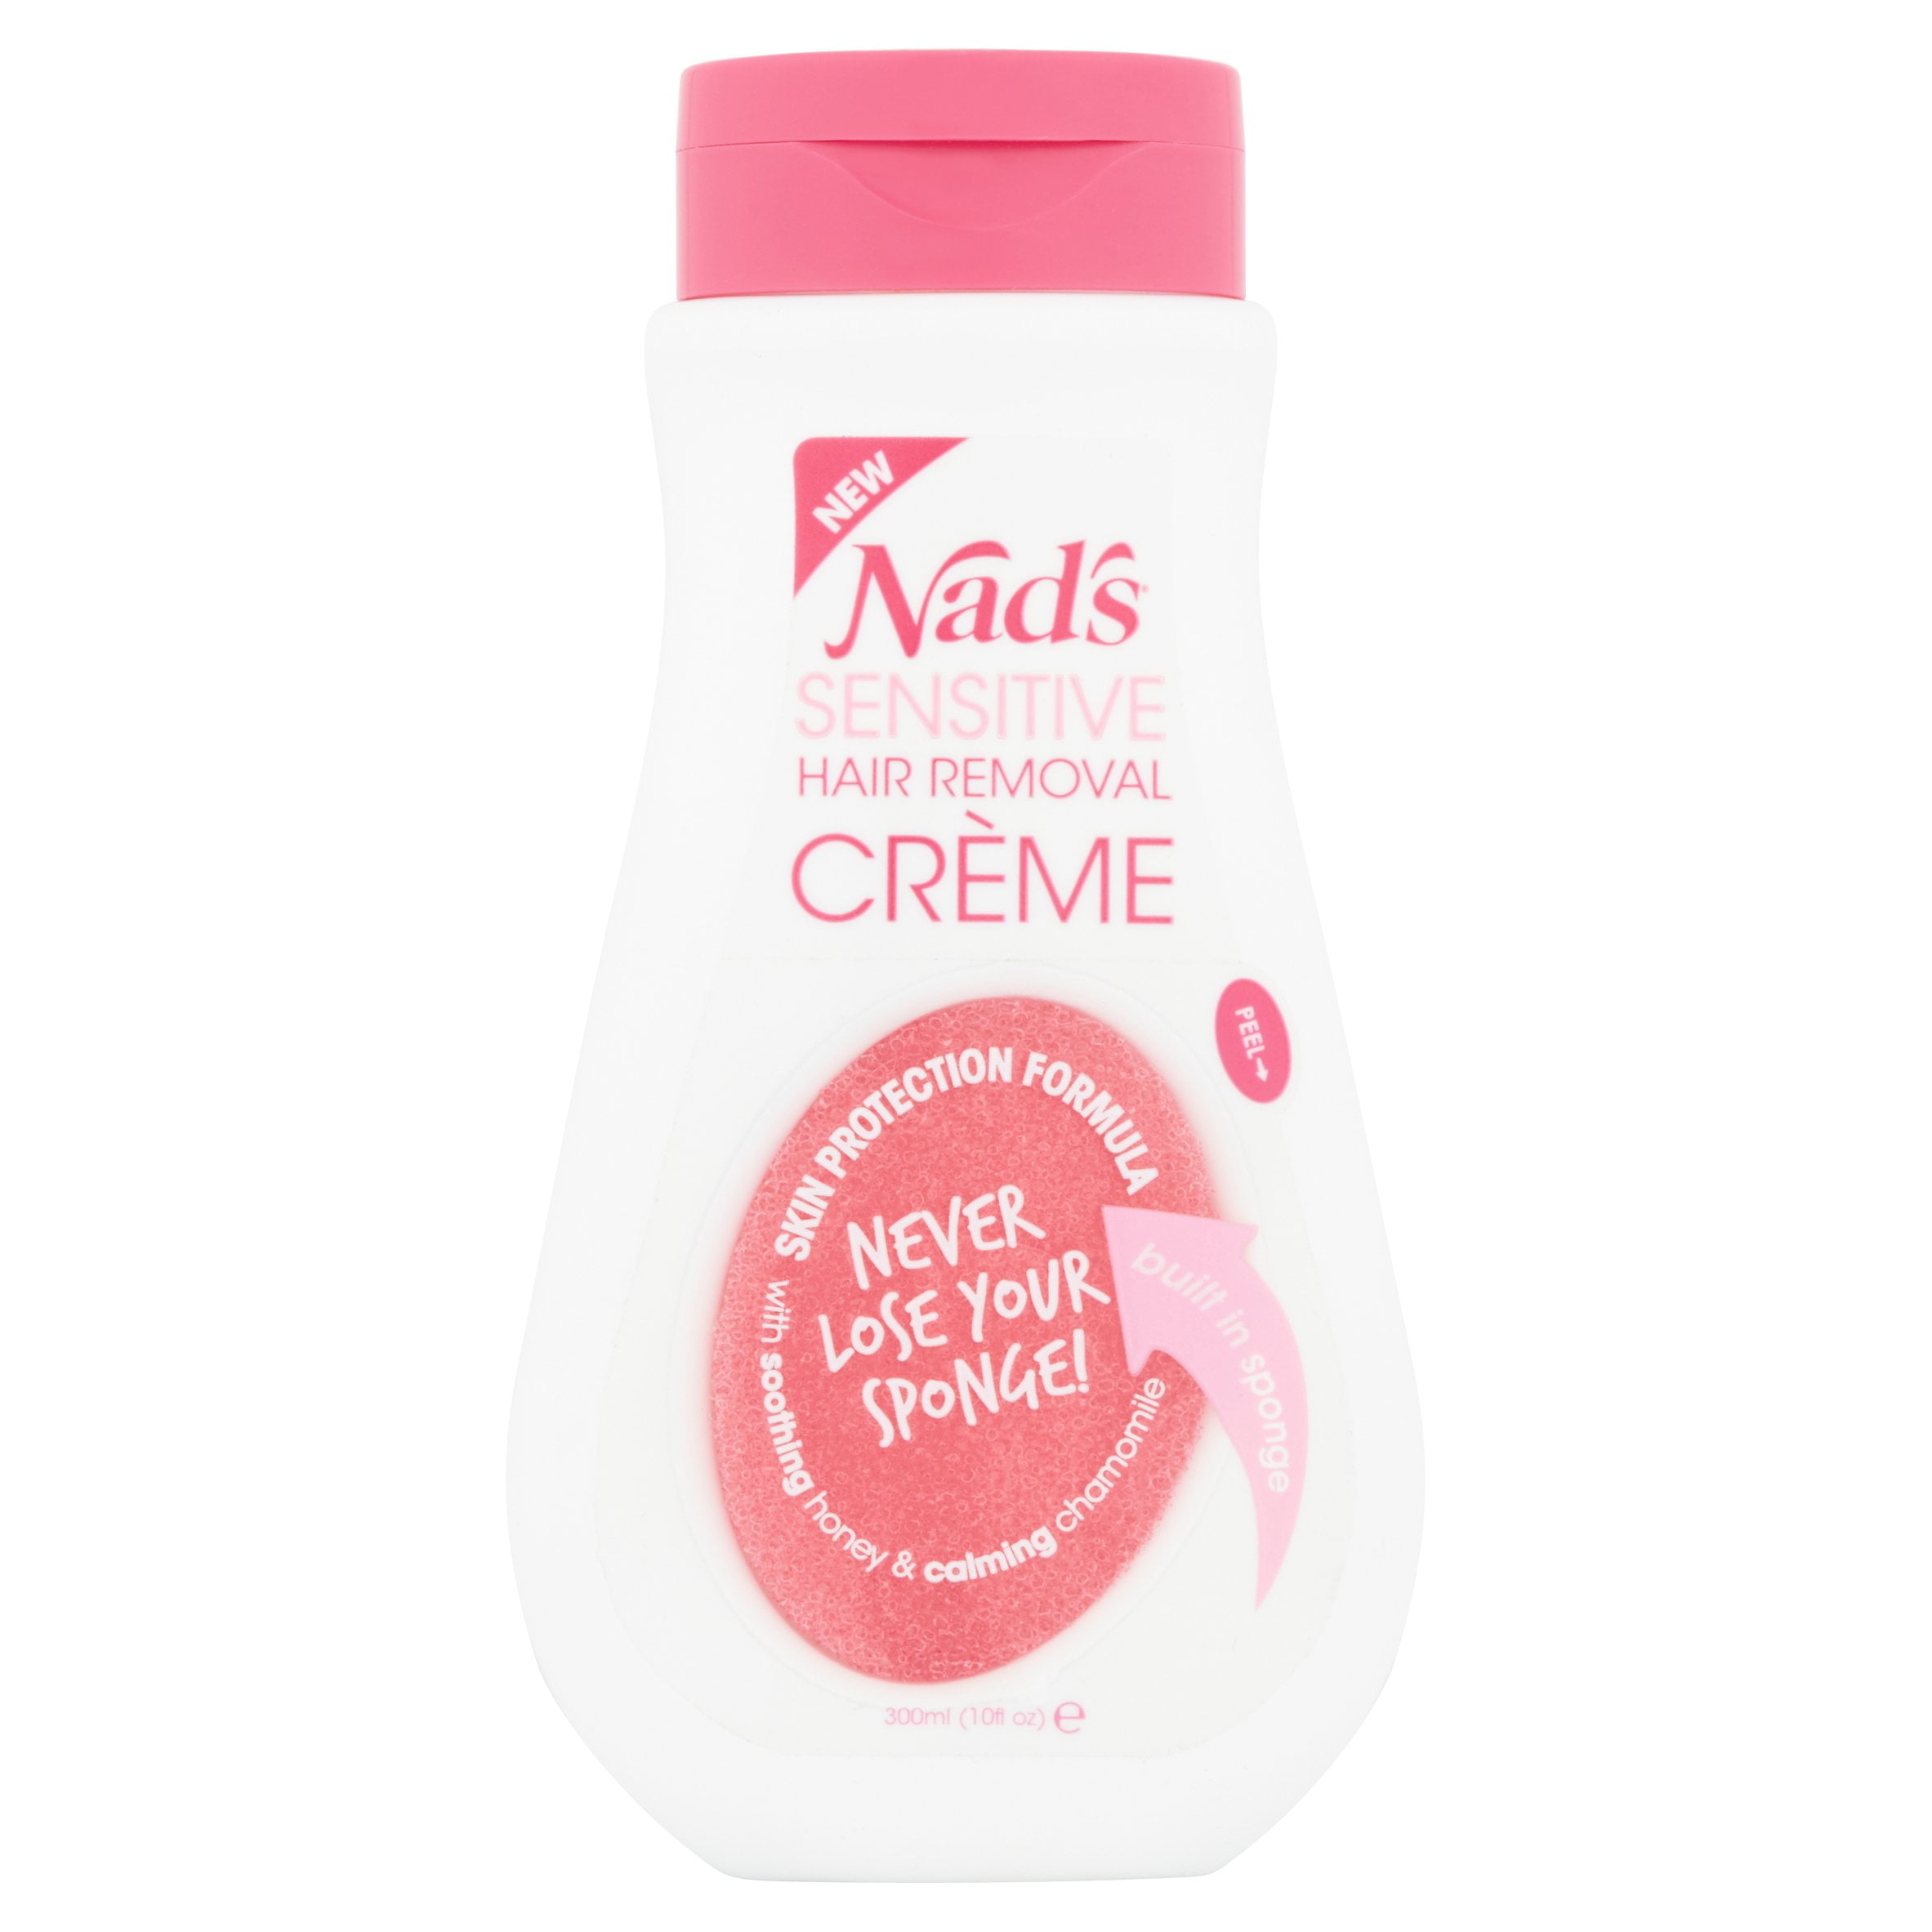 Nad's Sensitive Hair Removal Creme  oz 